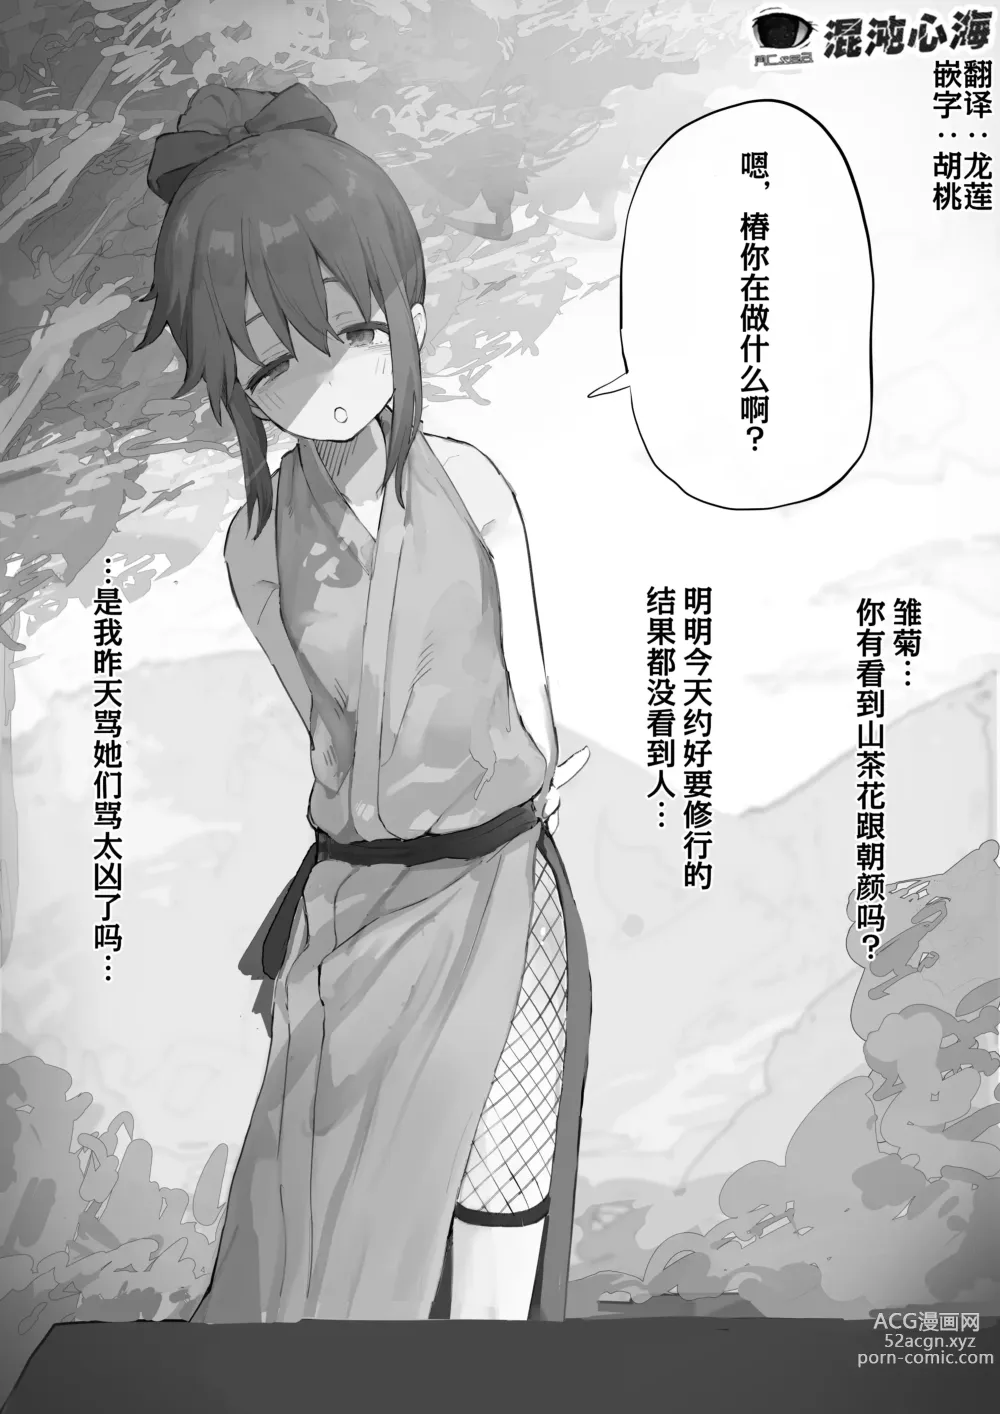 Page 1 of manga nakama ga uba wa re tyau tenkai ha nankai yaxtu te mo ii no zyutu